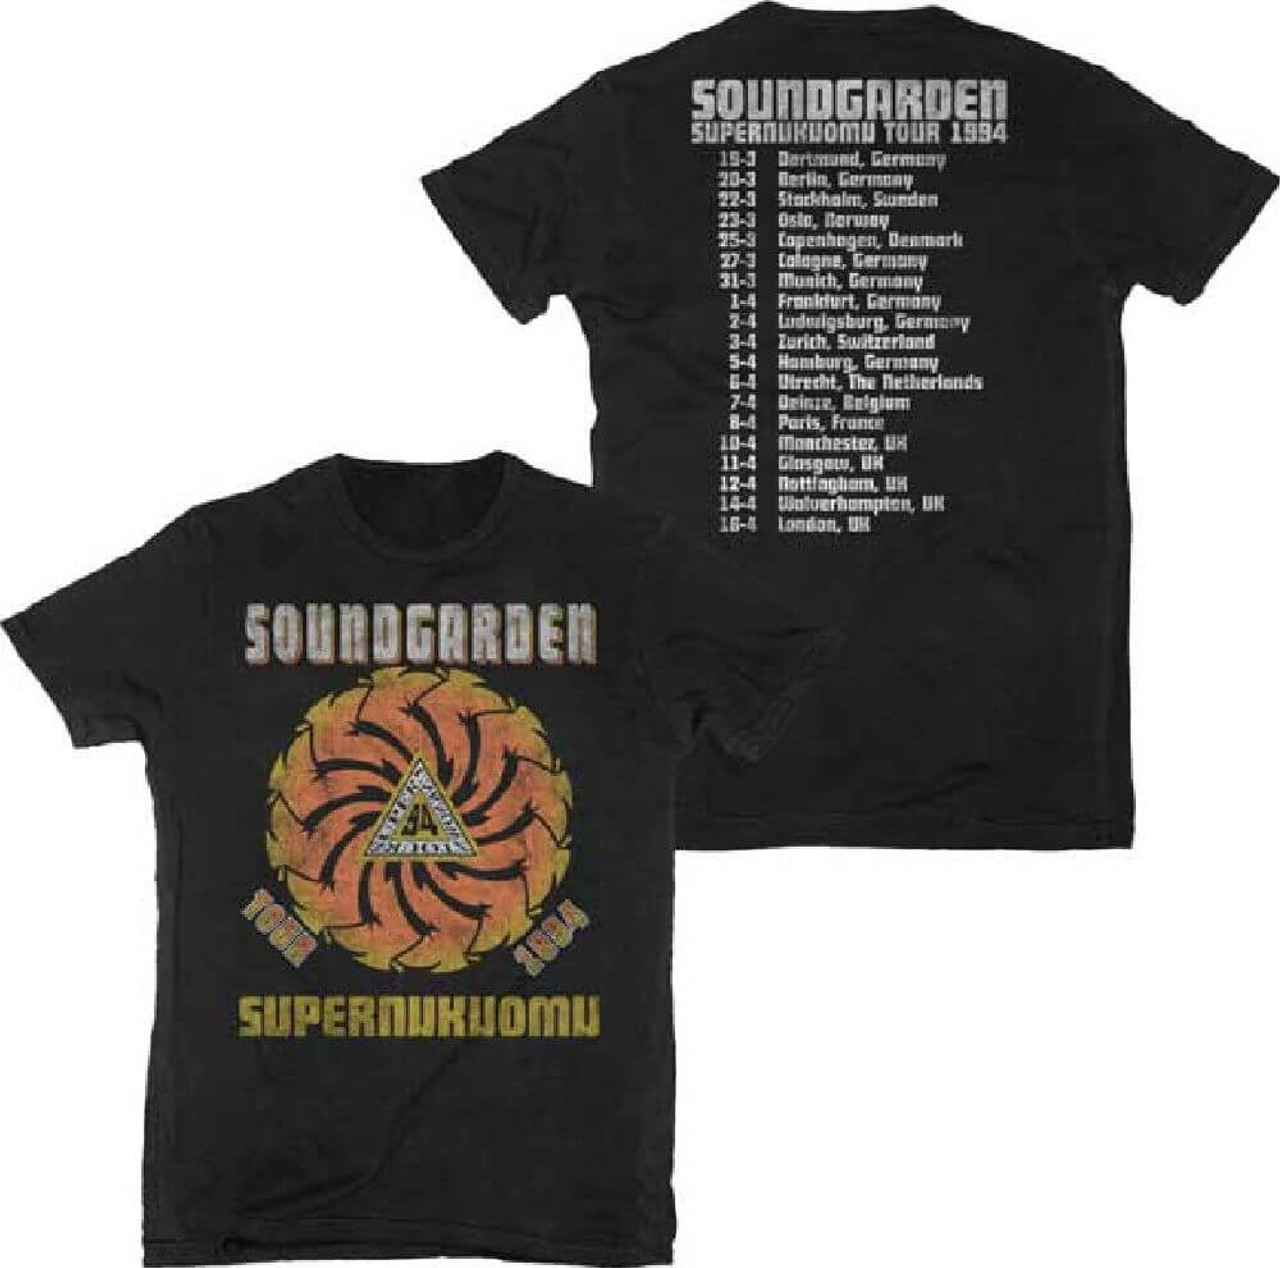 impuls Smitsom sygdom kylling Soundgarden Superunknown Tour 1994 Men's Concert T-shirt